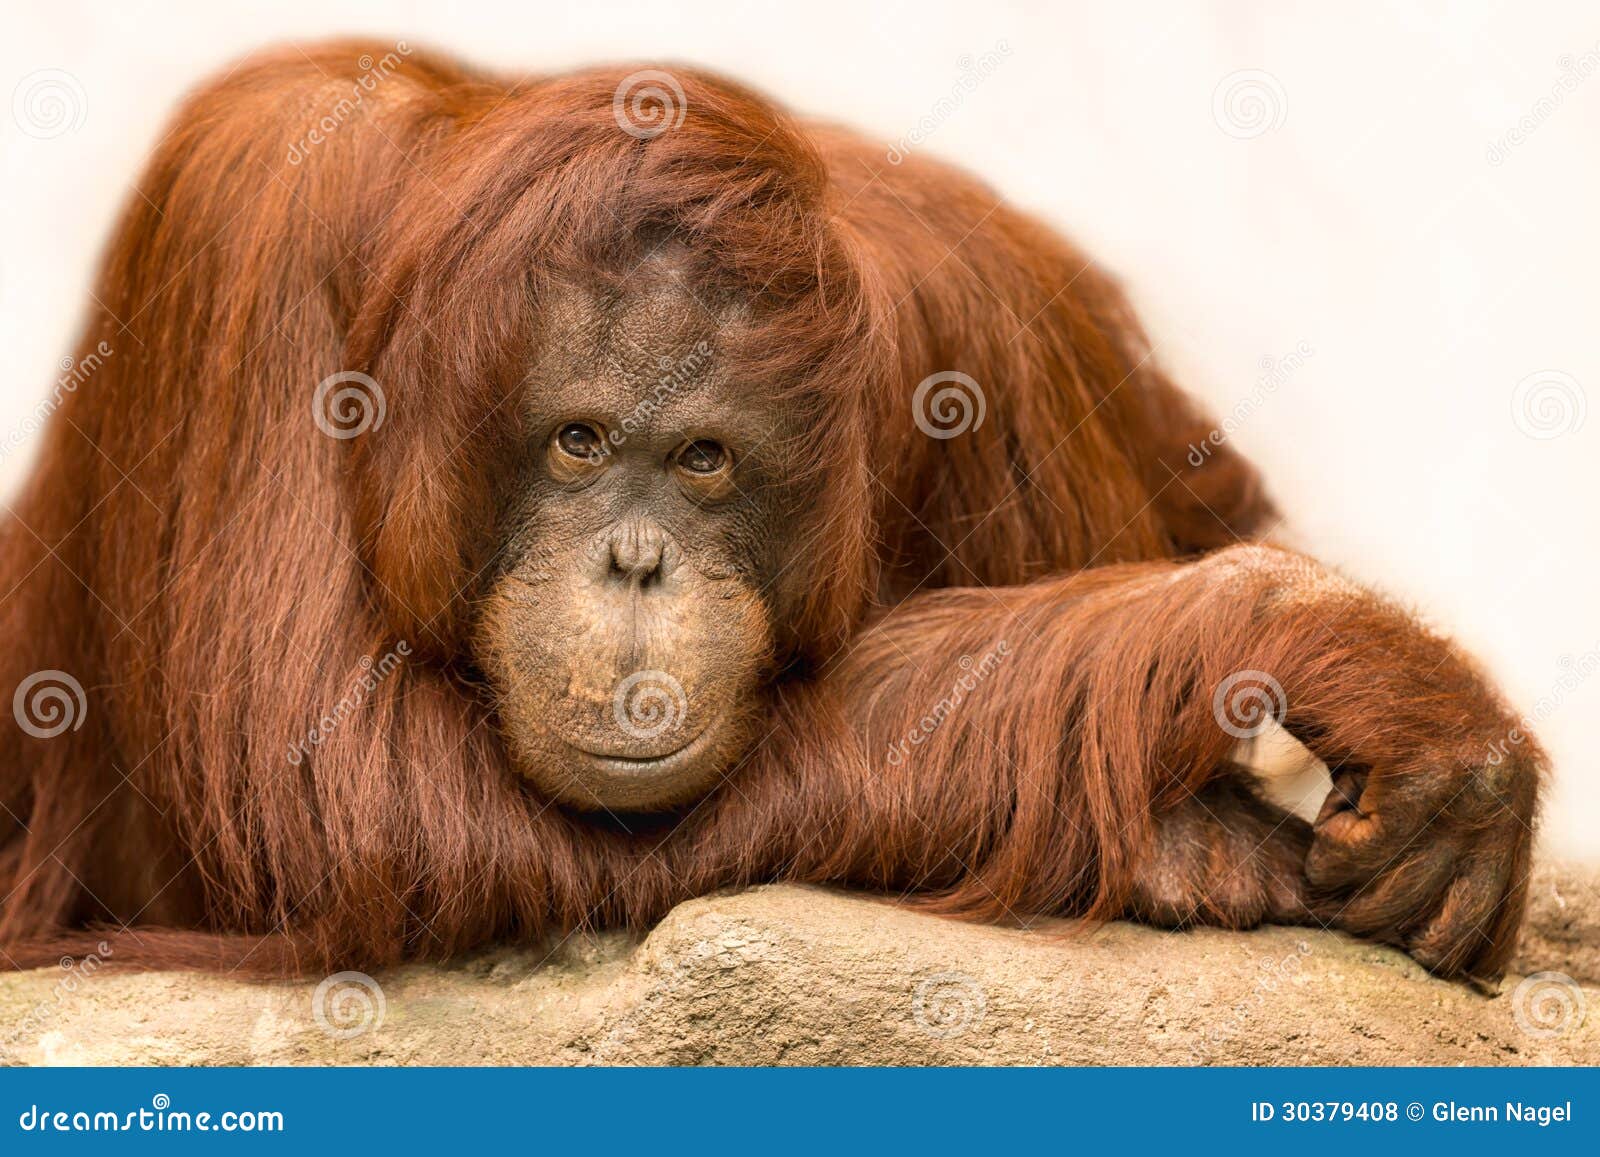 1,841 Orangutan Closeup Stock Photos - Free & Royalty-Free Stock Photos  from Dreamstime